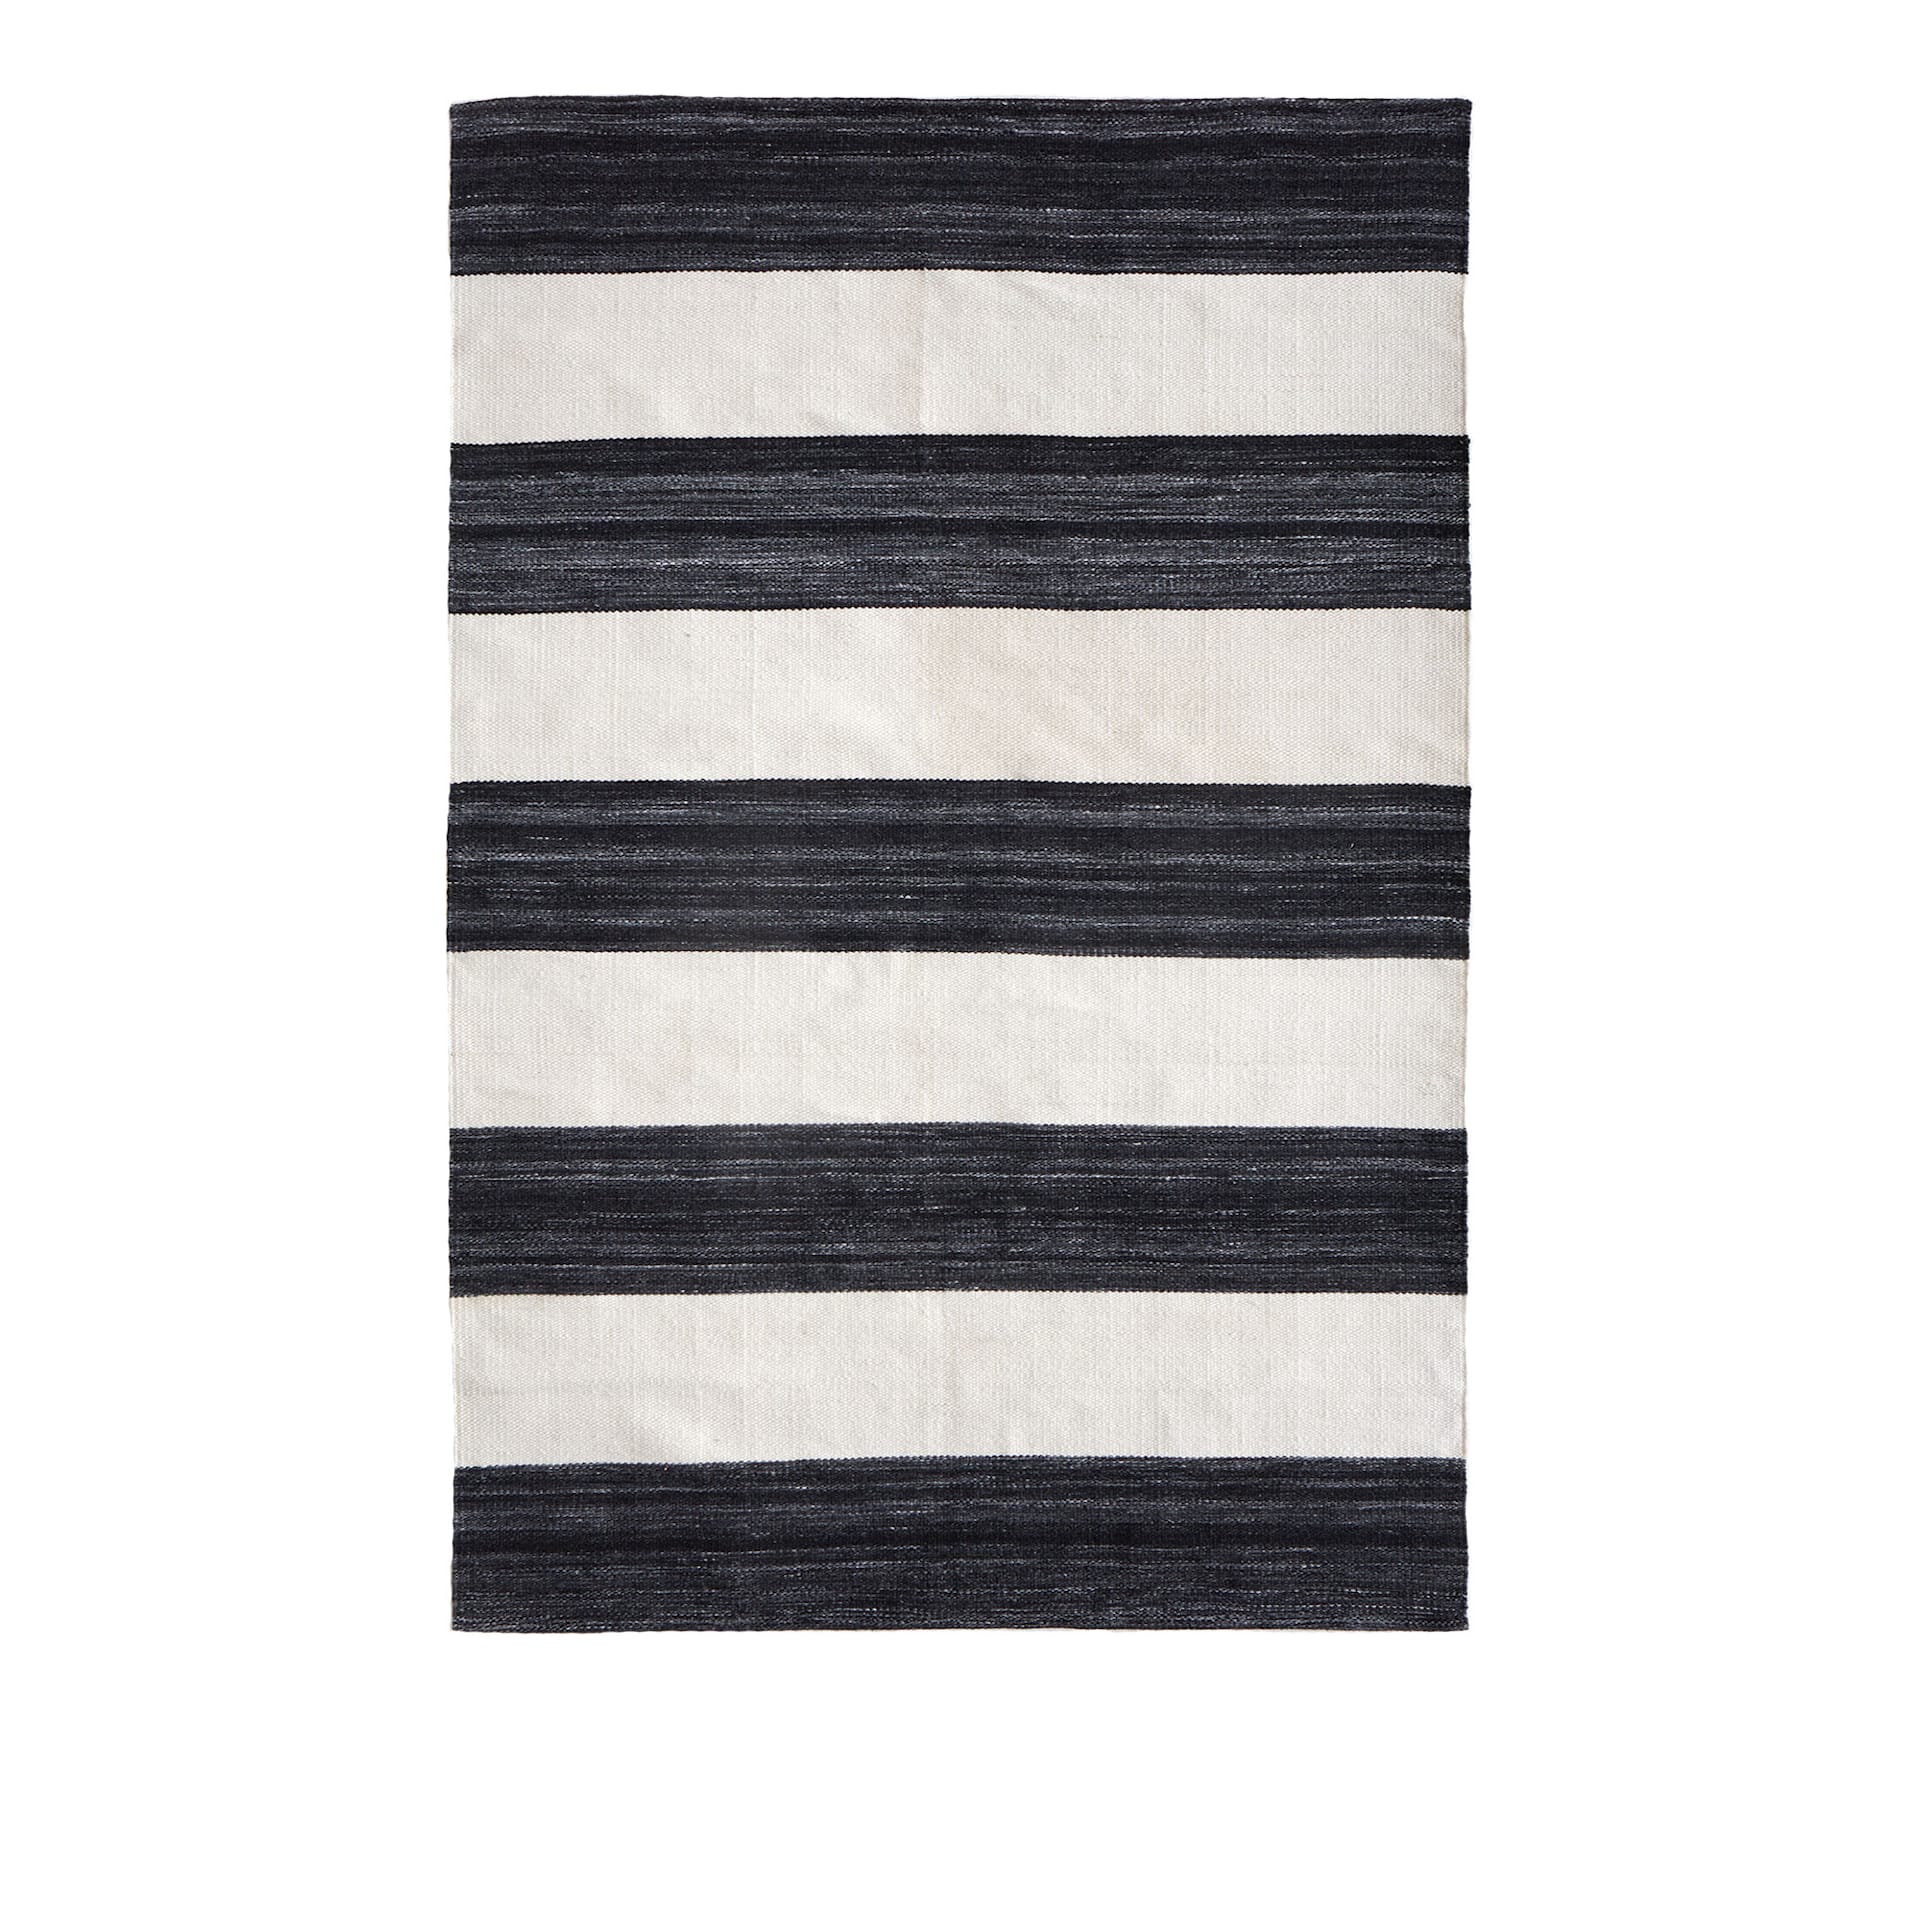 Outdoor Stripe Rug Black/White - Nordiska Galleriet Rugs - NO GA